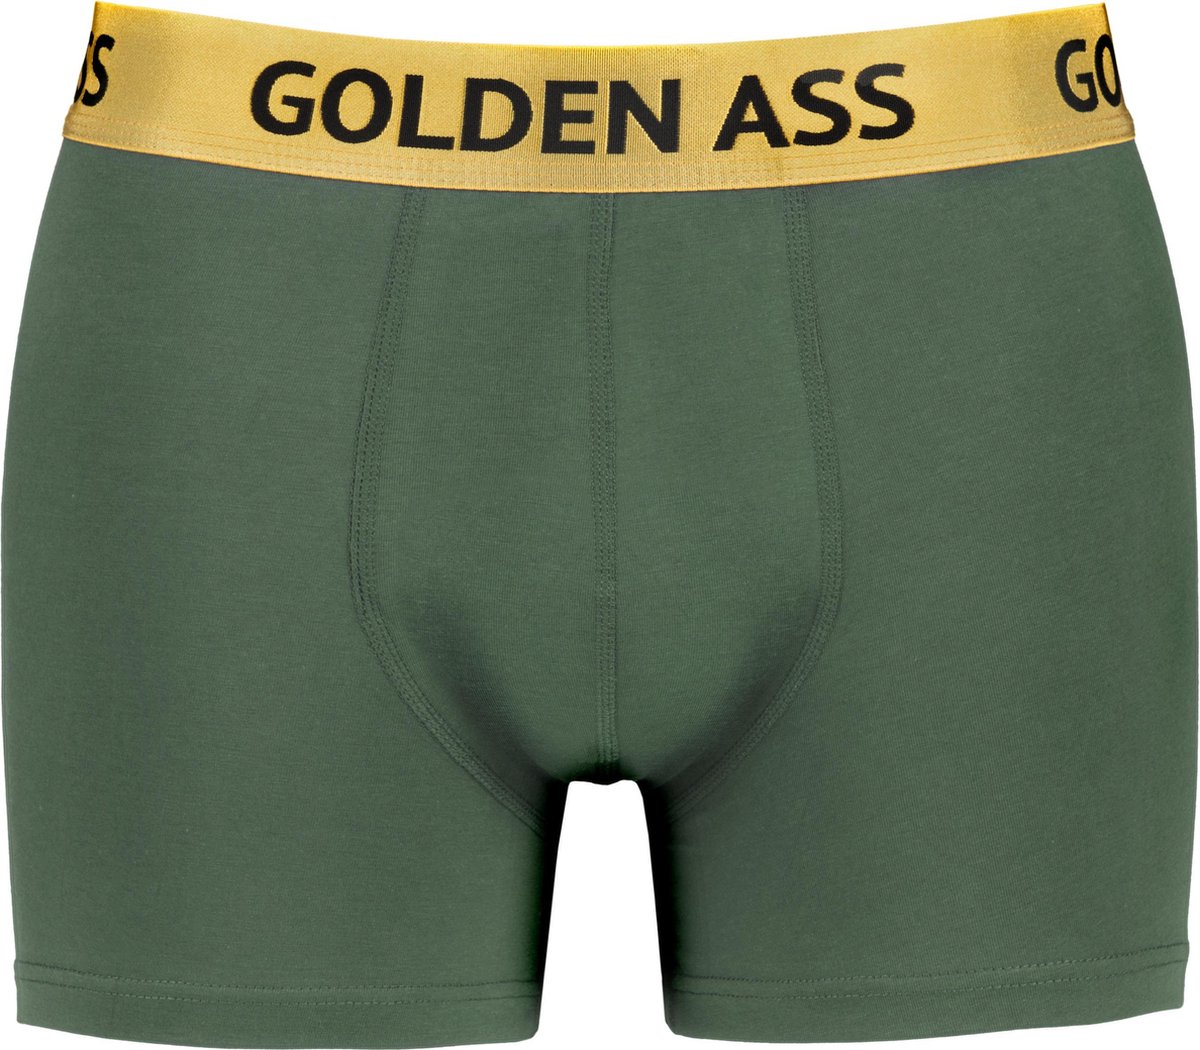 Golden Ass - Heren boxershort groen M